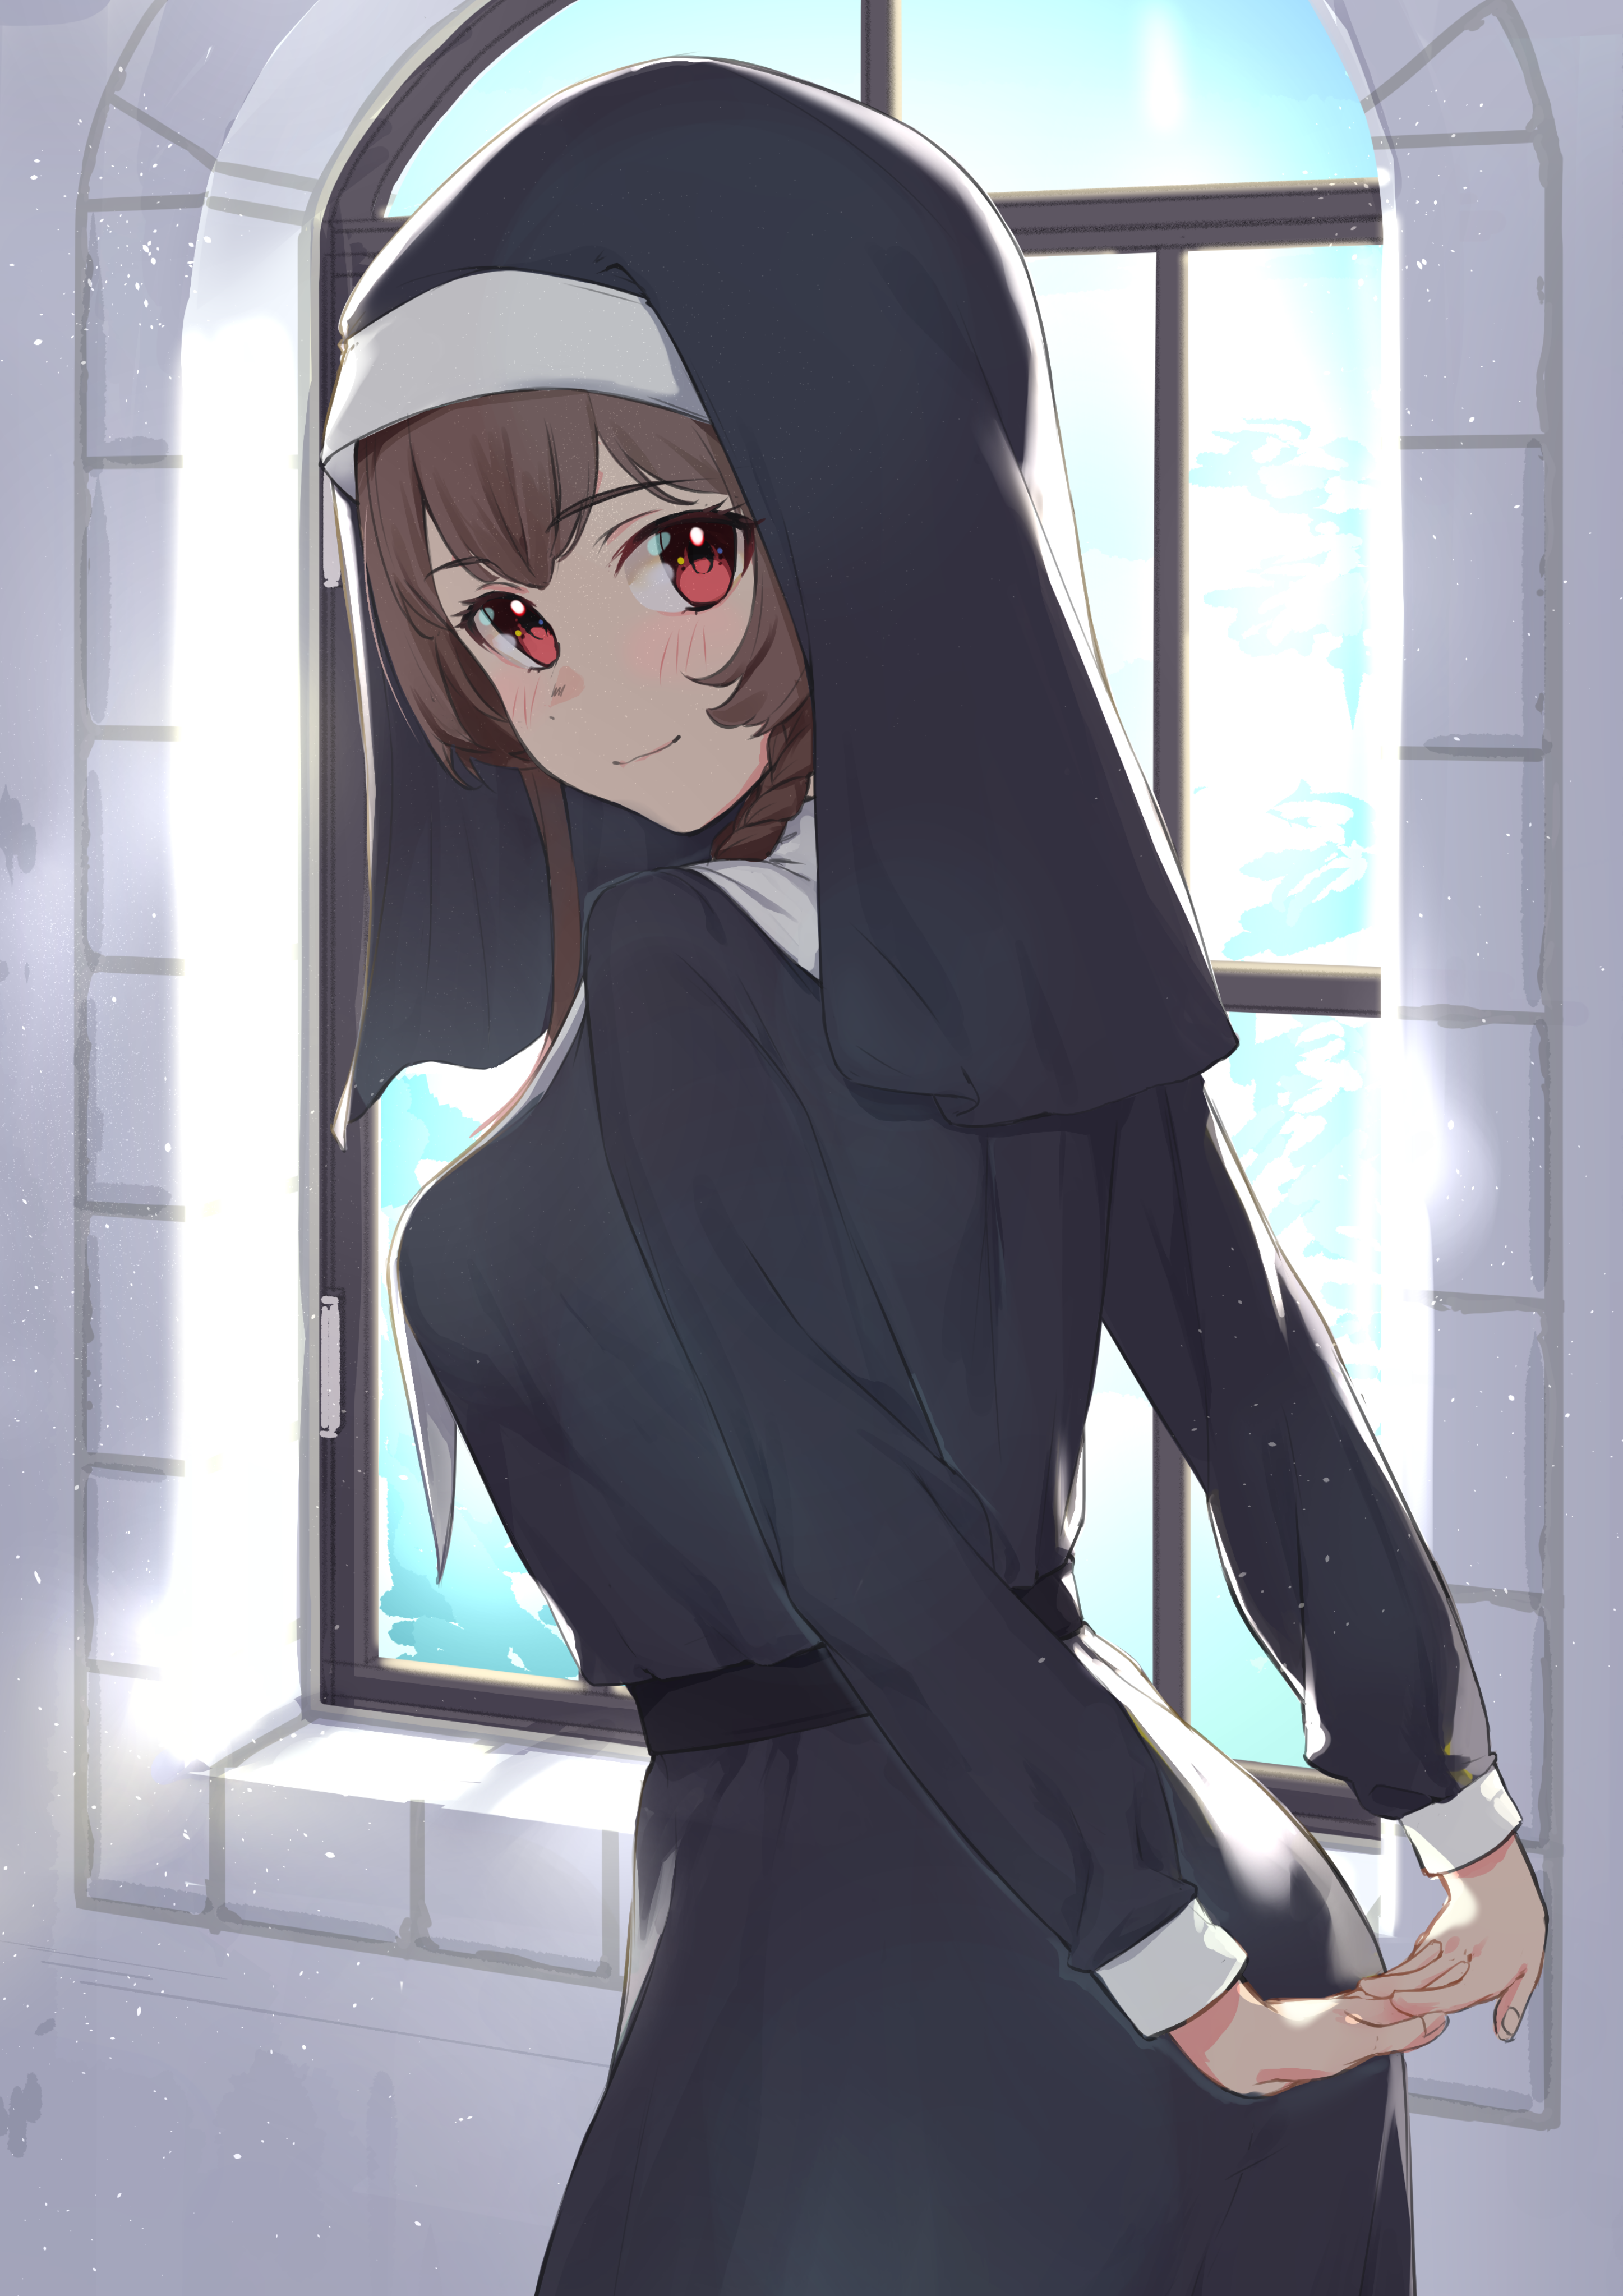 Anime Anime Girls Nuns Nun Outfit Original Characters Artwork Digital Art Fan Art 2894x4093